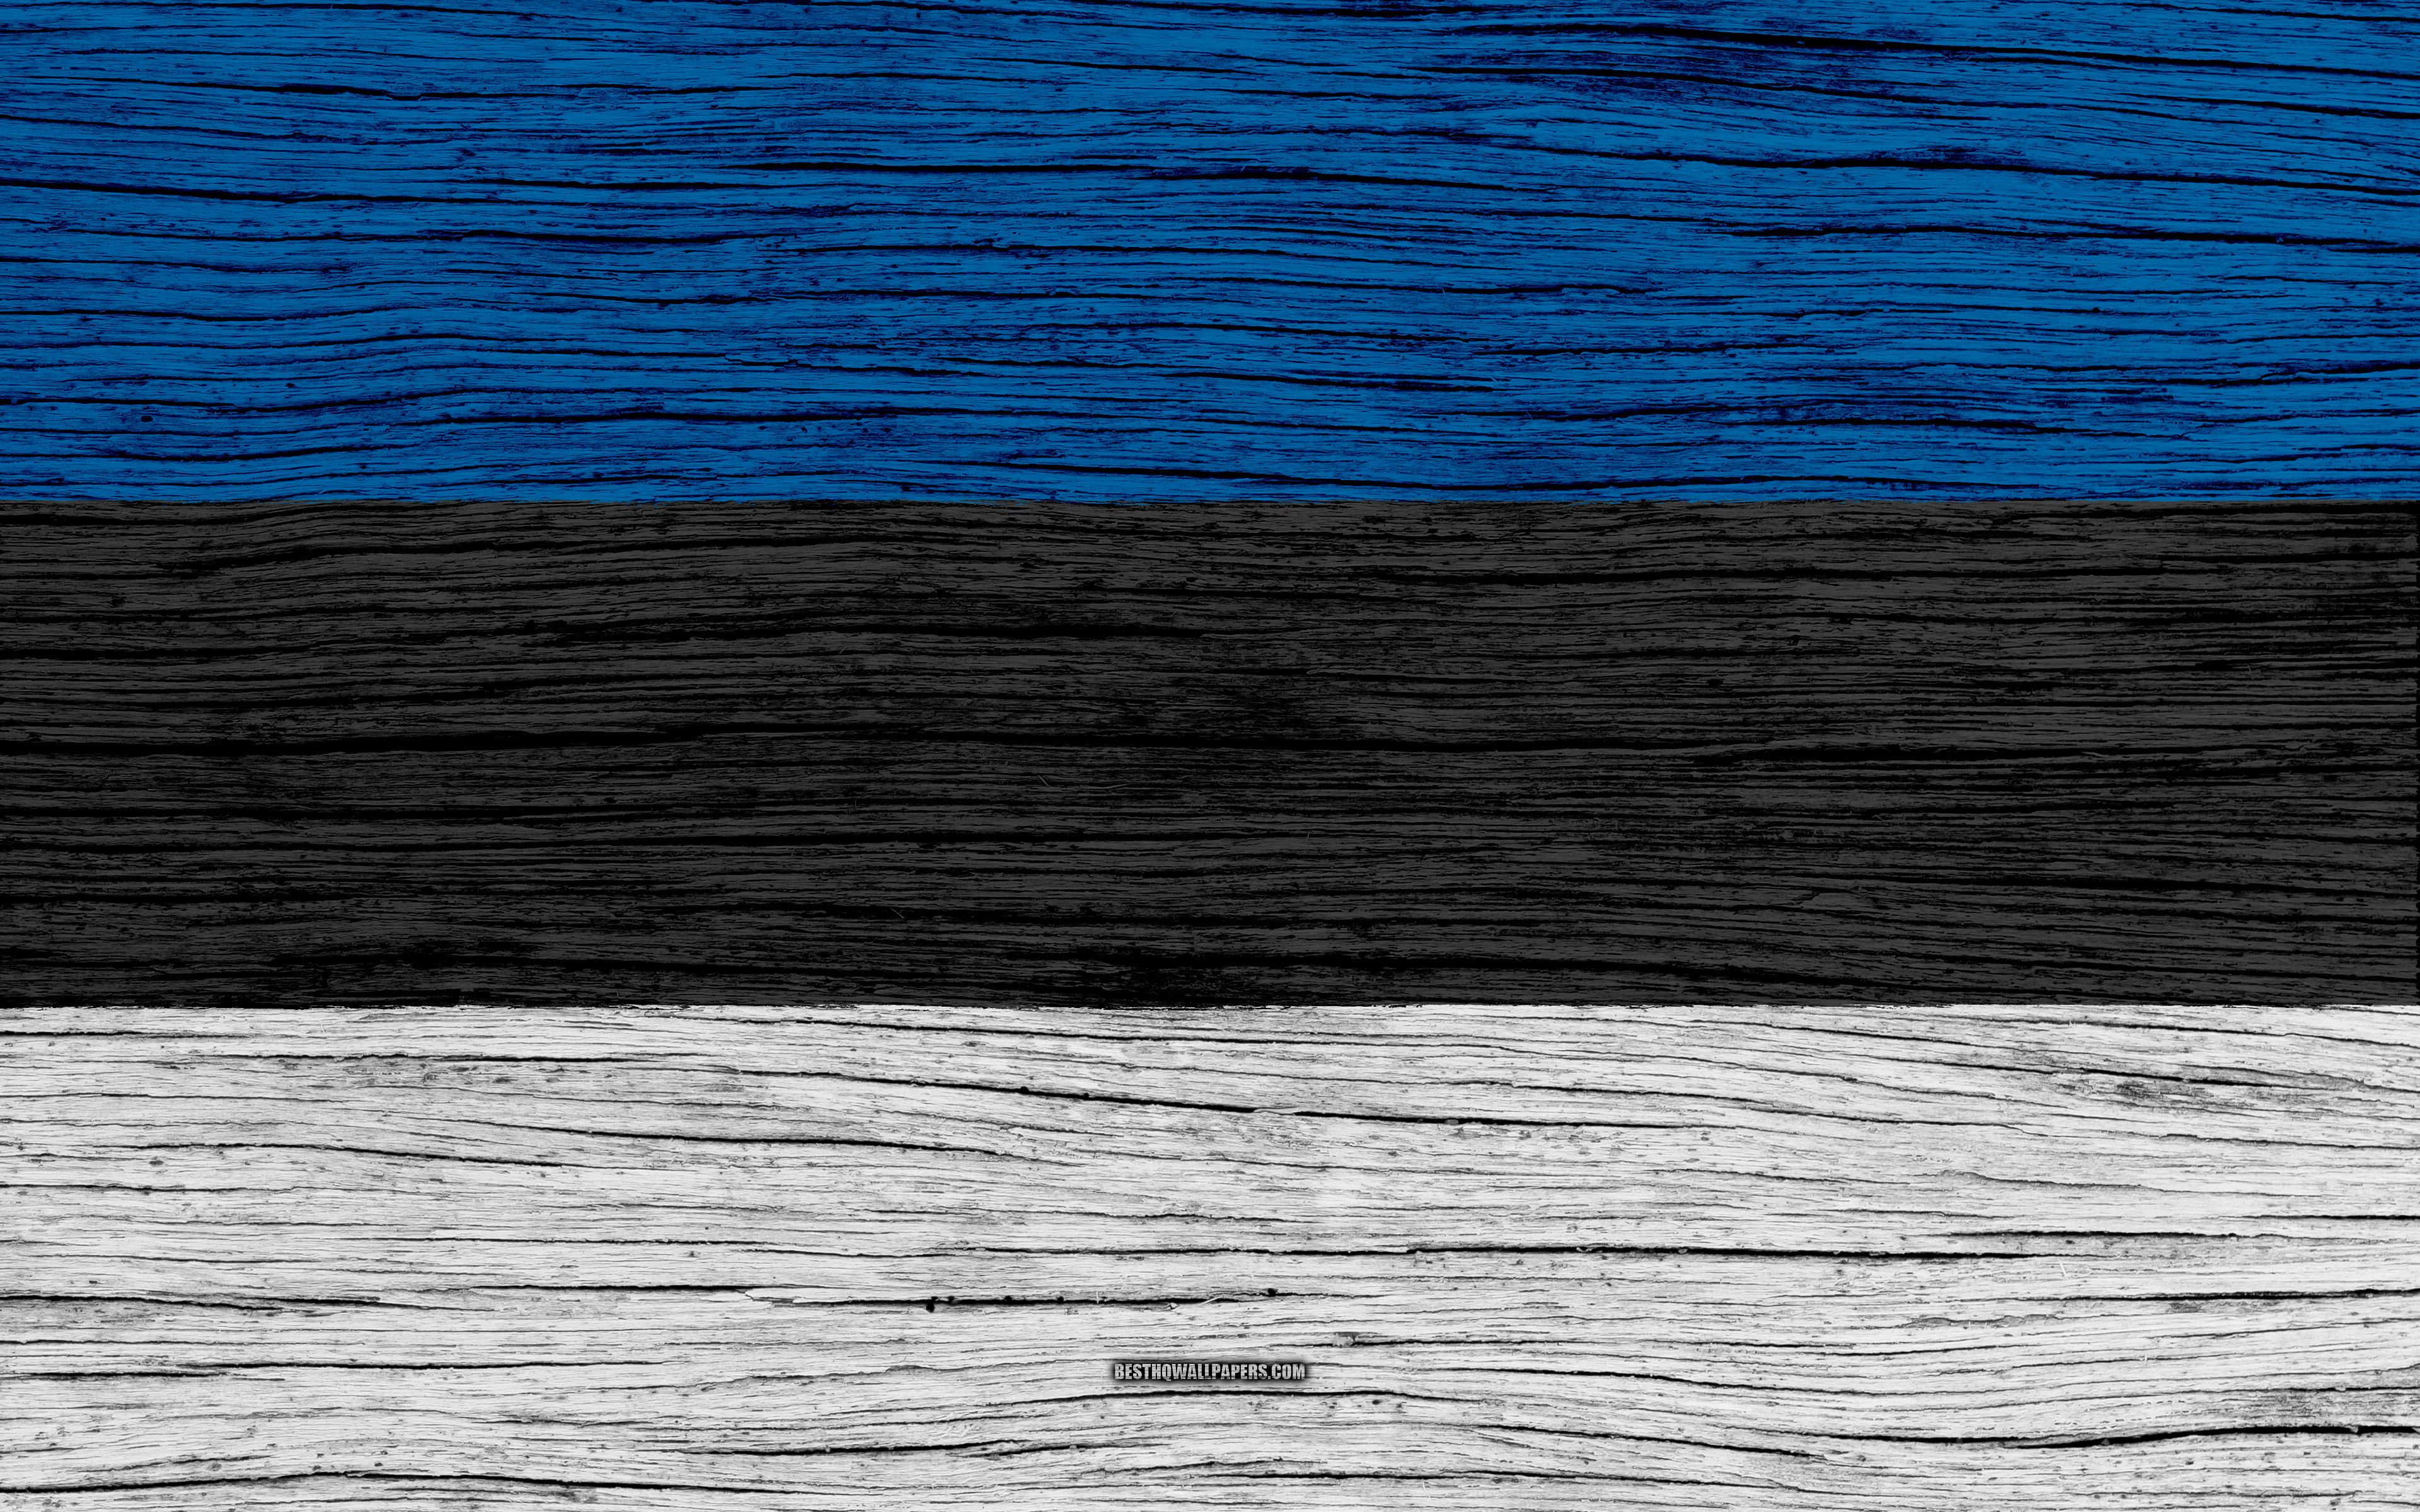 Download wallpaper Flag of Estonia, 4k, Europe, wooden texture